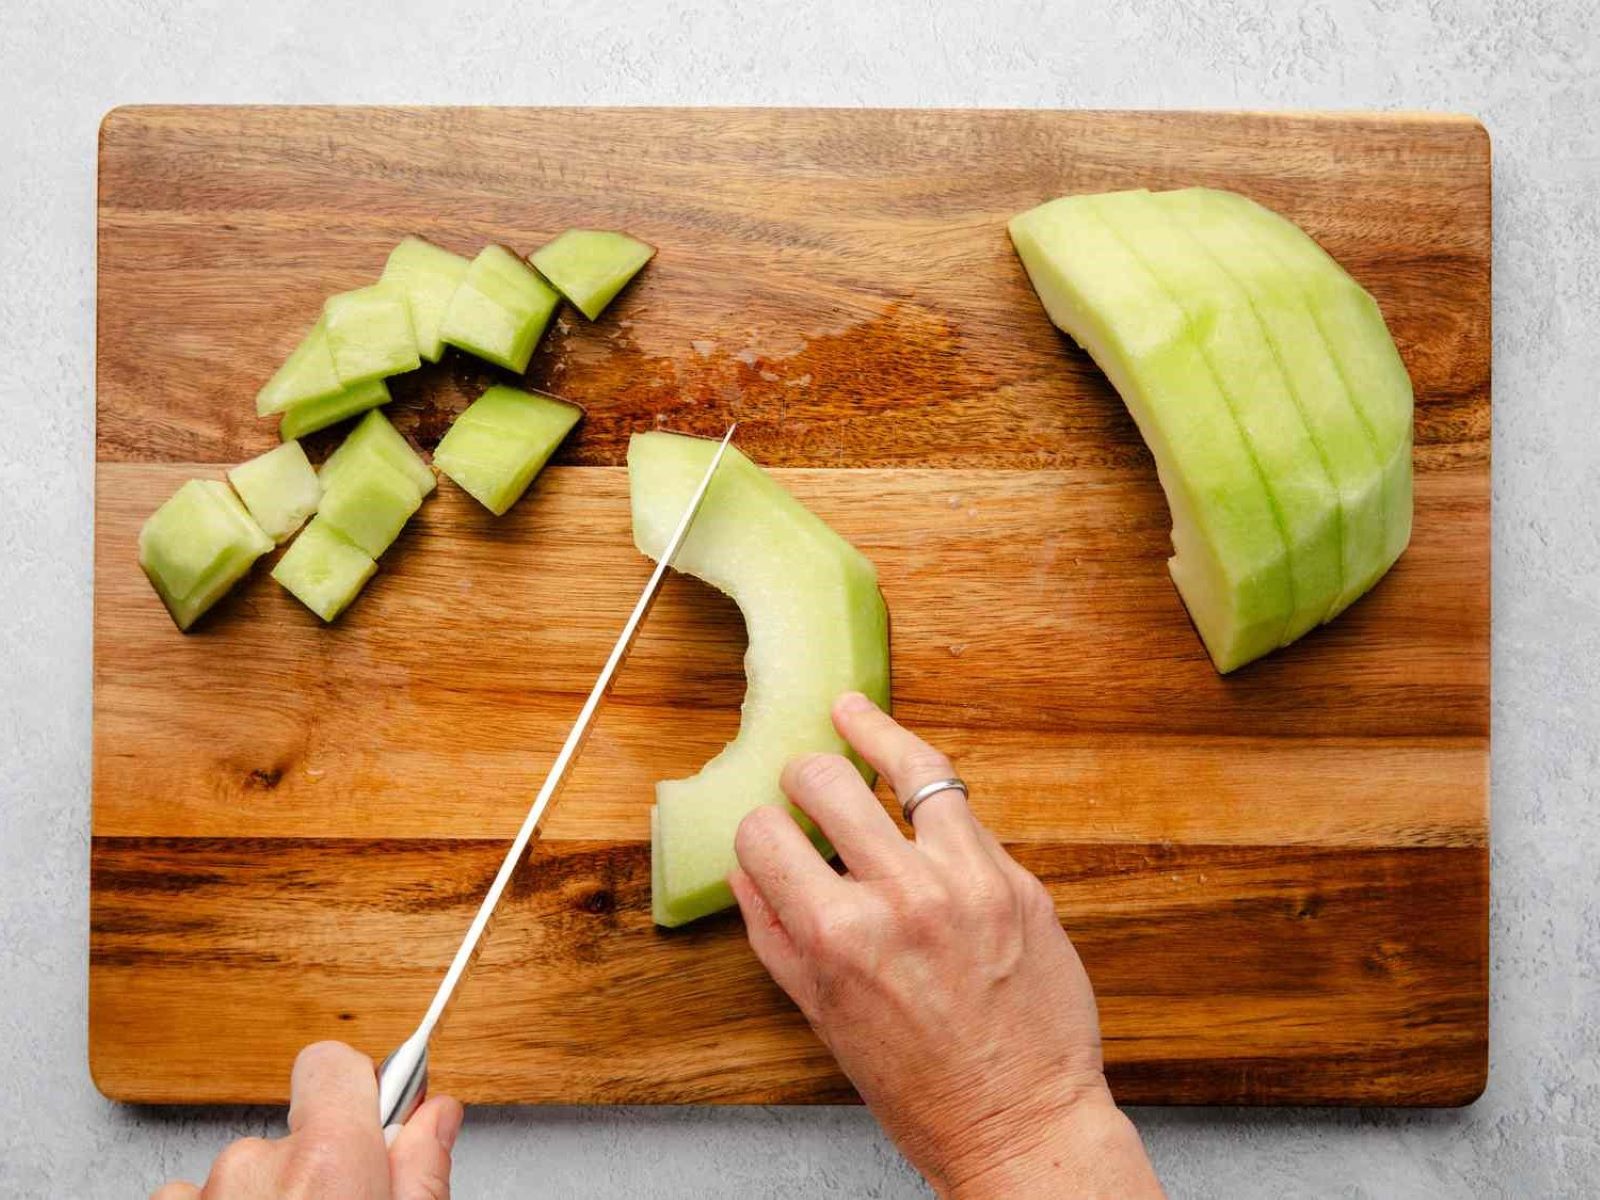 How To Cut Honeydew Melon